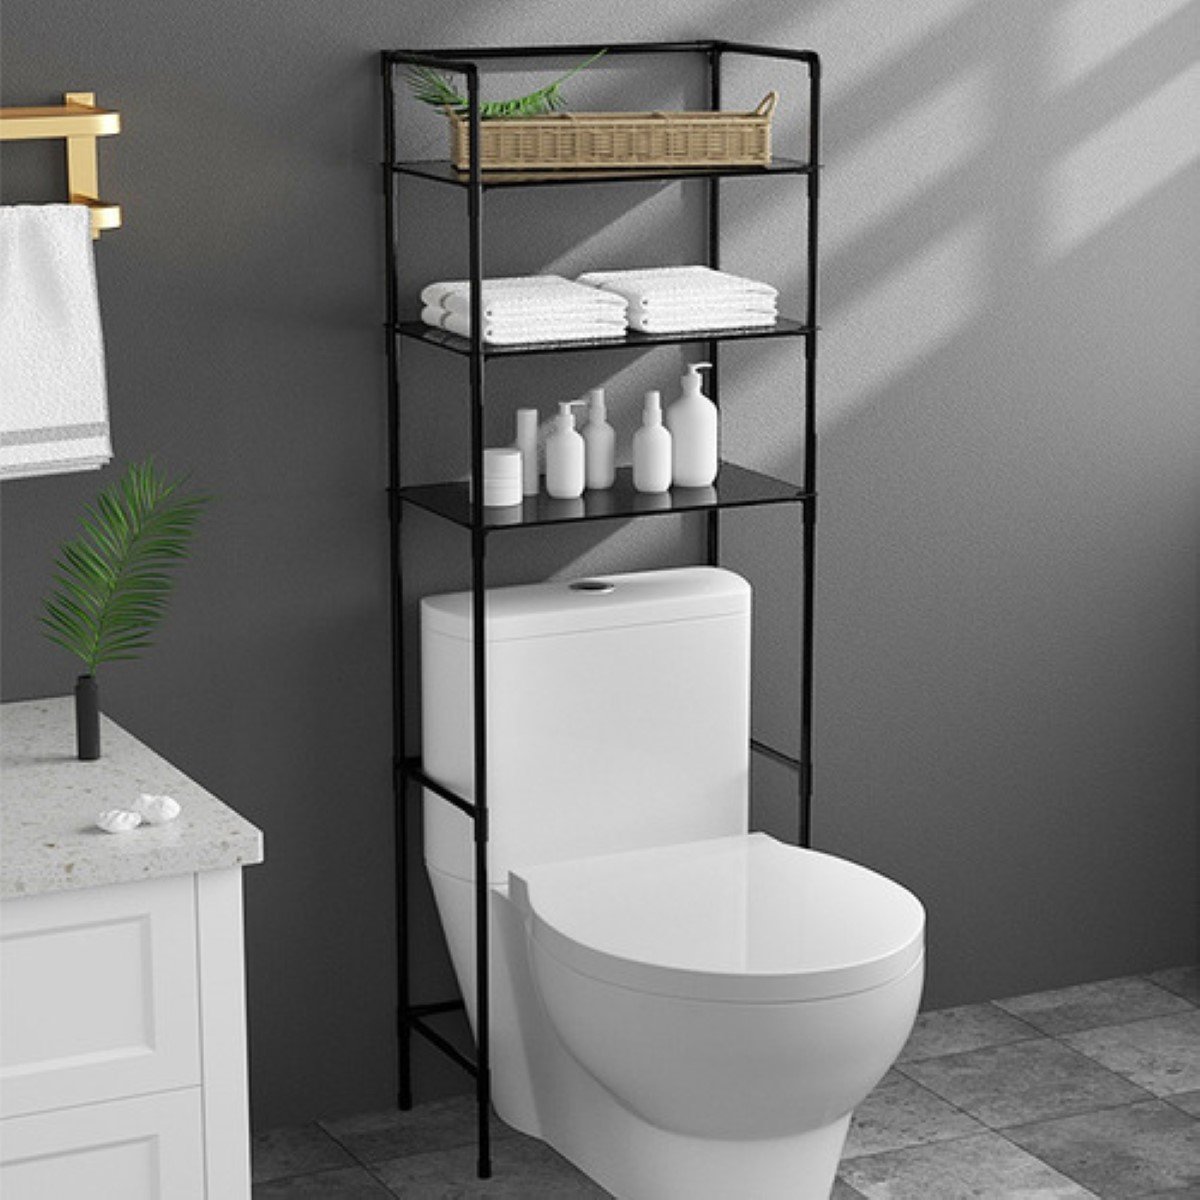  JRMM - Estante de baño de 3 niveles con toallero - Toallero de  pared para almacenamiento de ducha, toallero estantes para baño, cocina,  baño, baño, oficina, accesorios de baño negro mate 